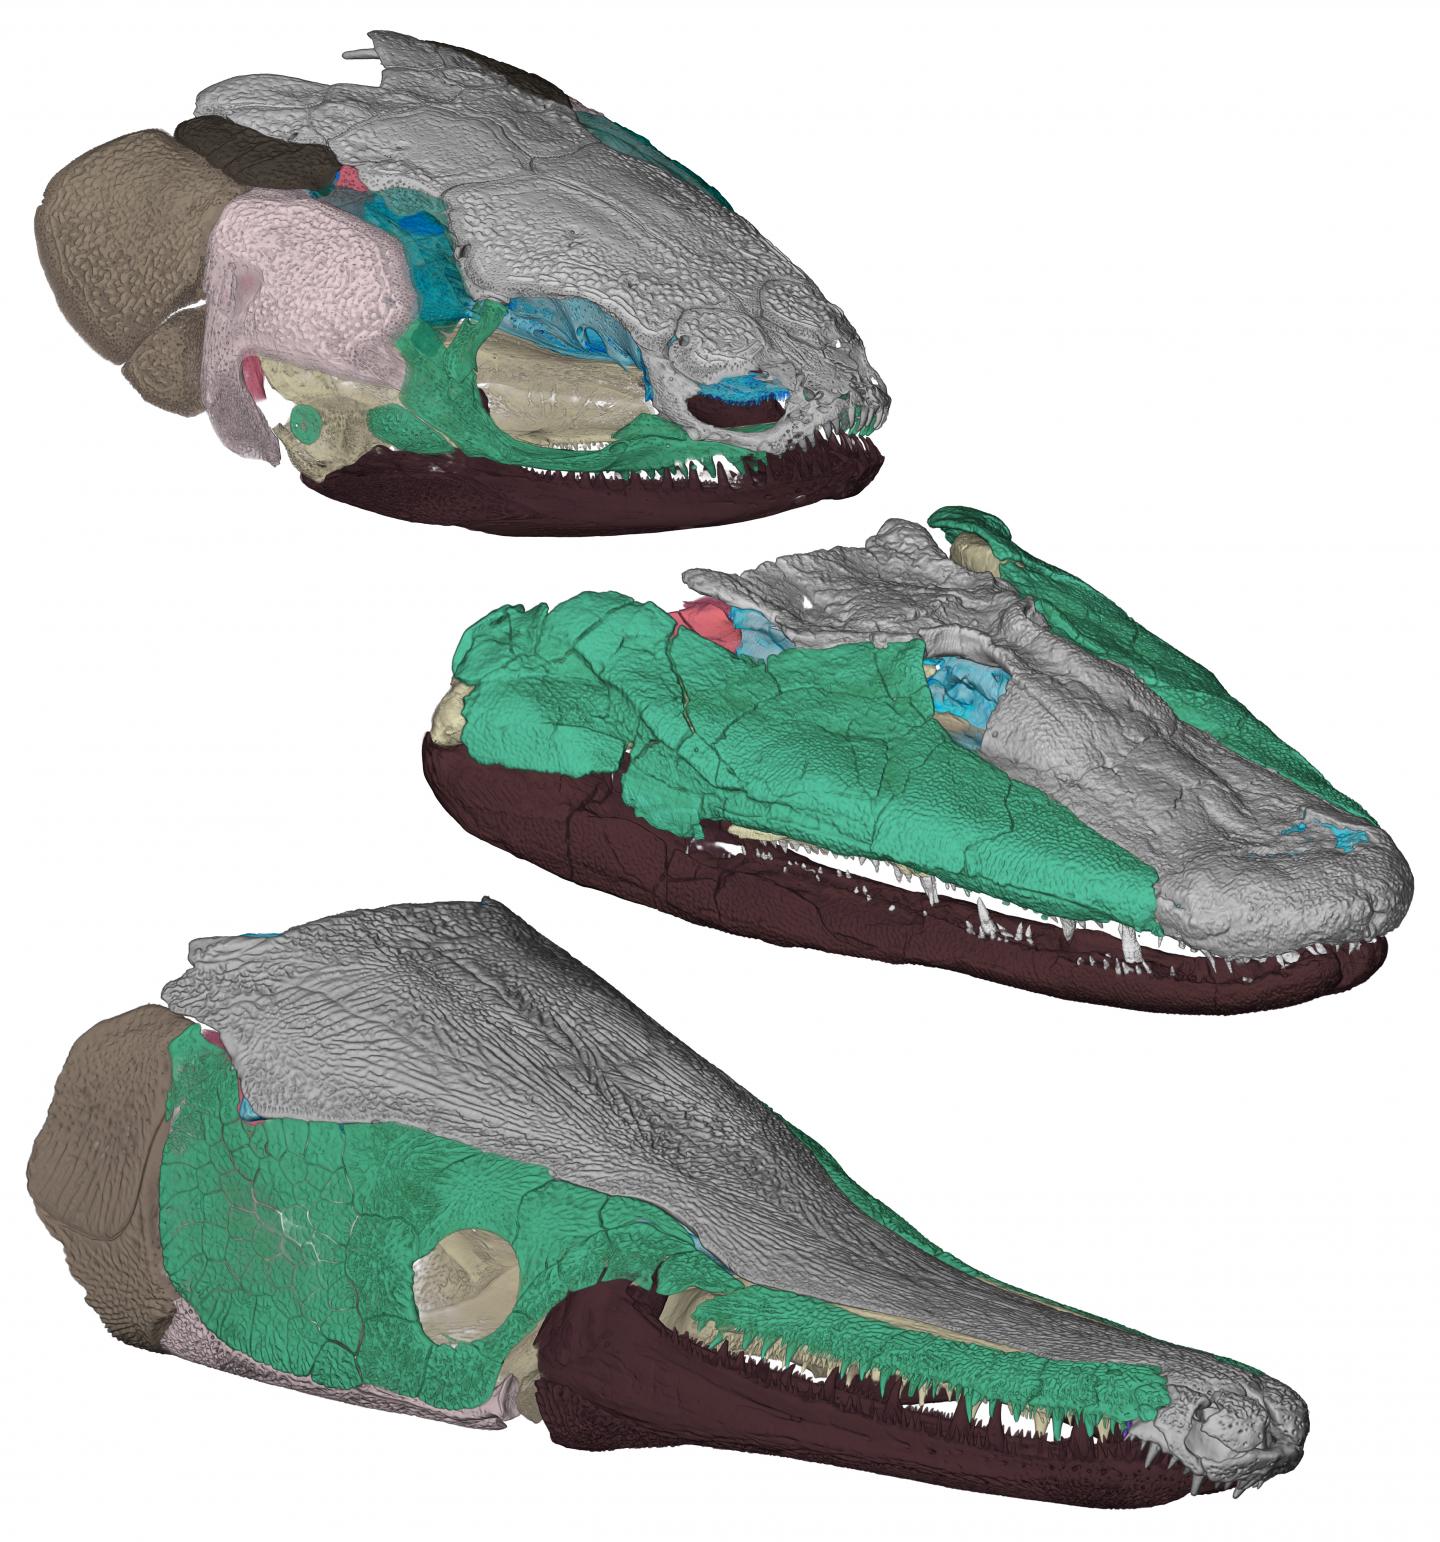 Tiktaalik roseae (middle) and two modern analogs (ornate bichir (top) and alligator gar (bottom)) have expandable skulls.